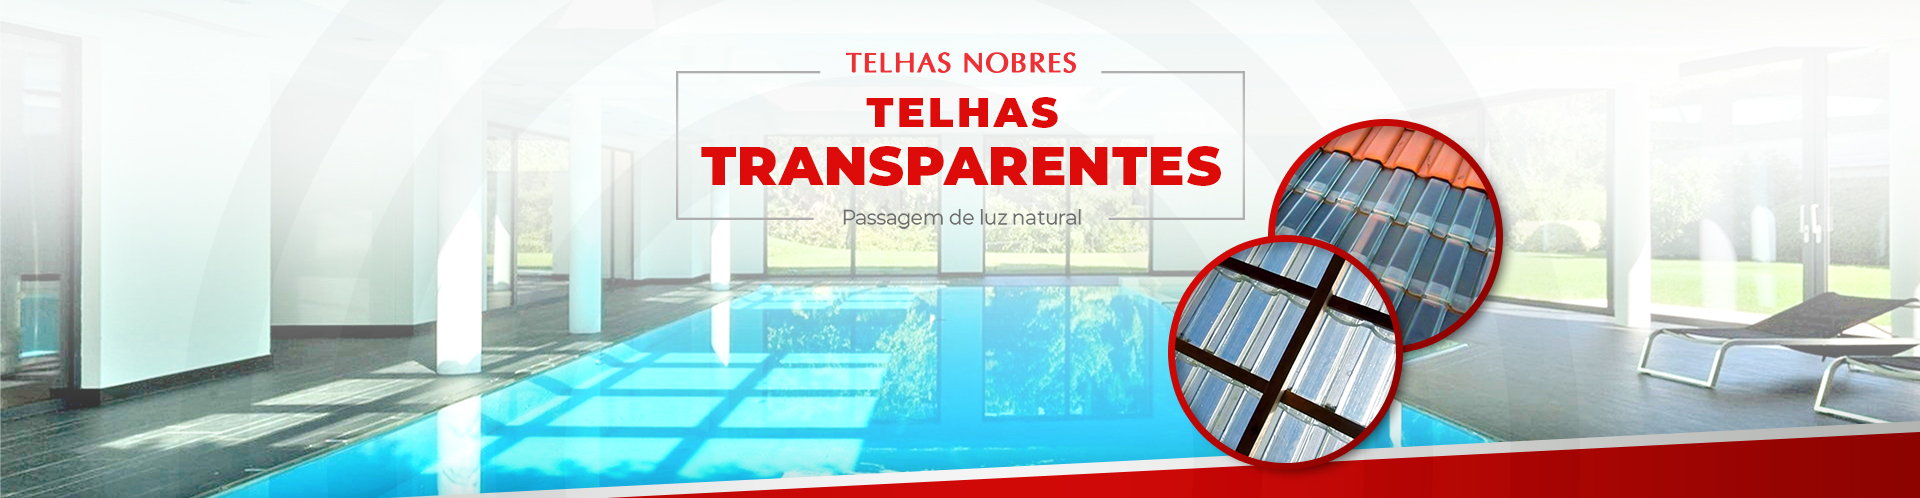 telhas_nobres-banner-telhas_transparentes